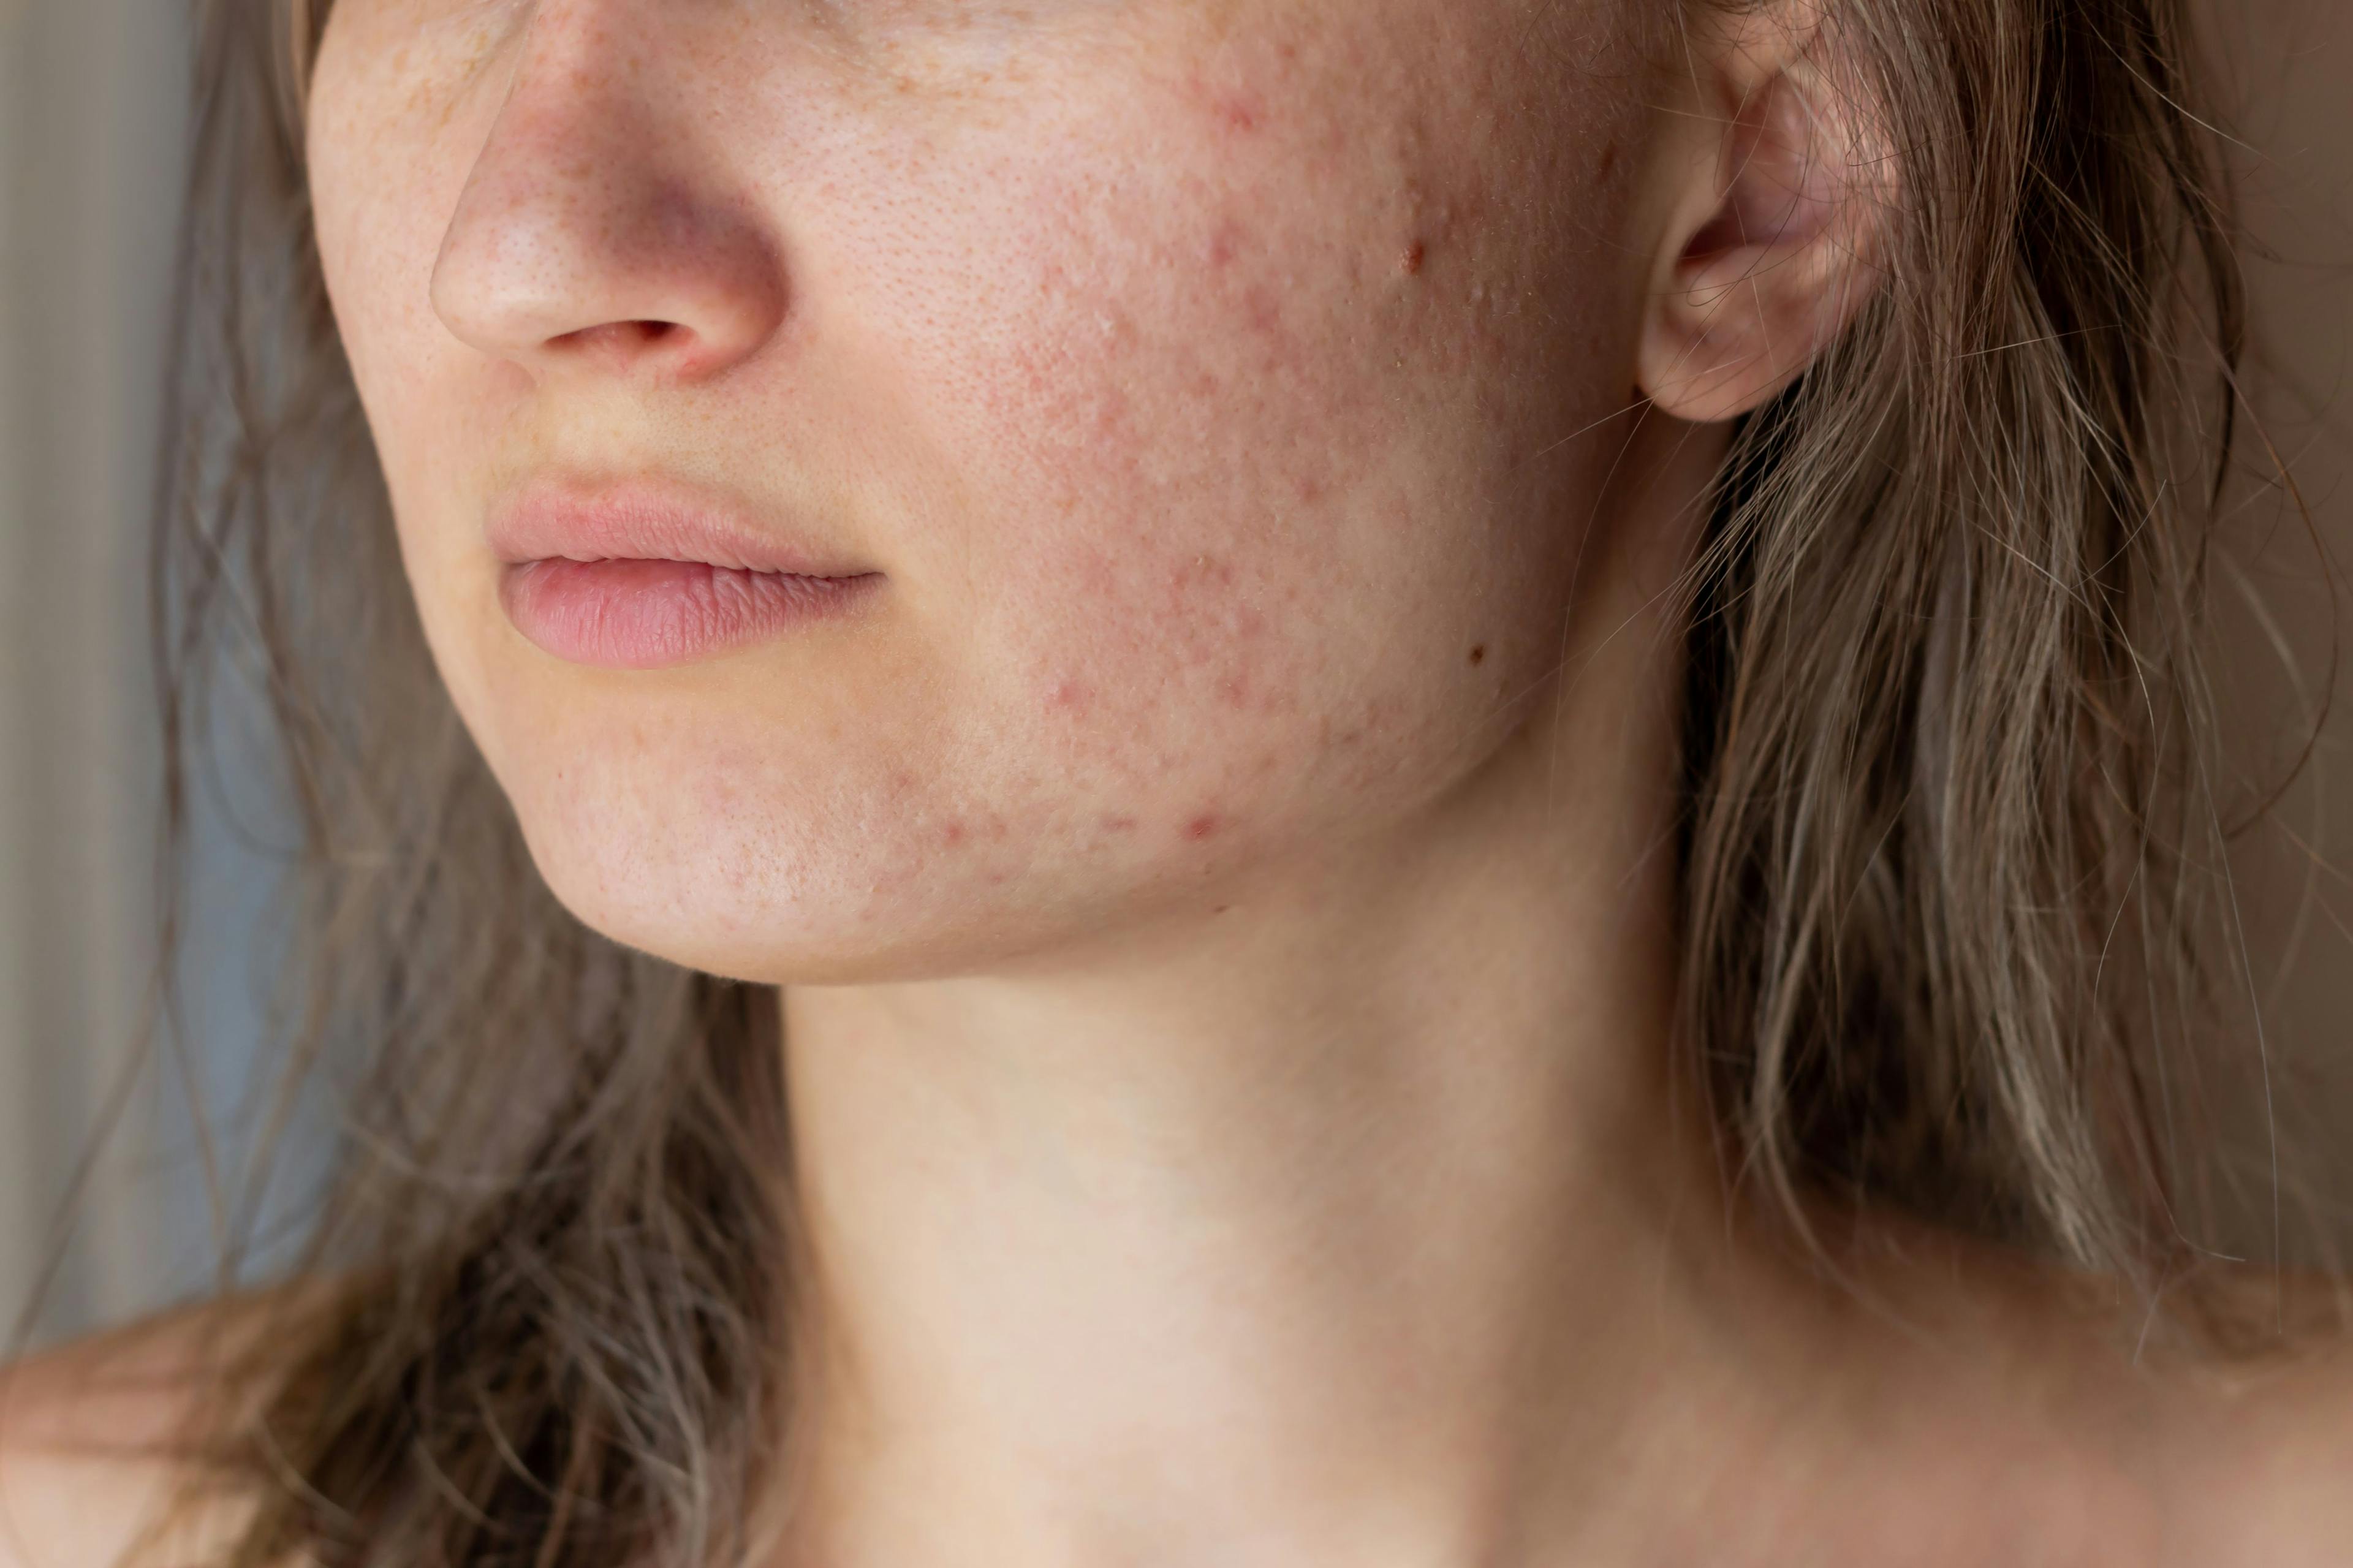 Patient with acne | Image Credit: © Марина Демешко - stock.adobe.com